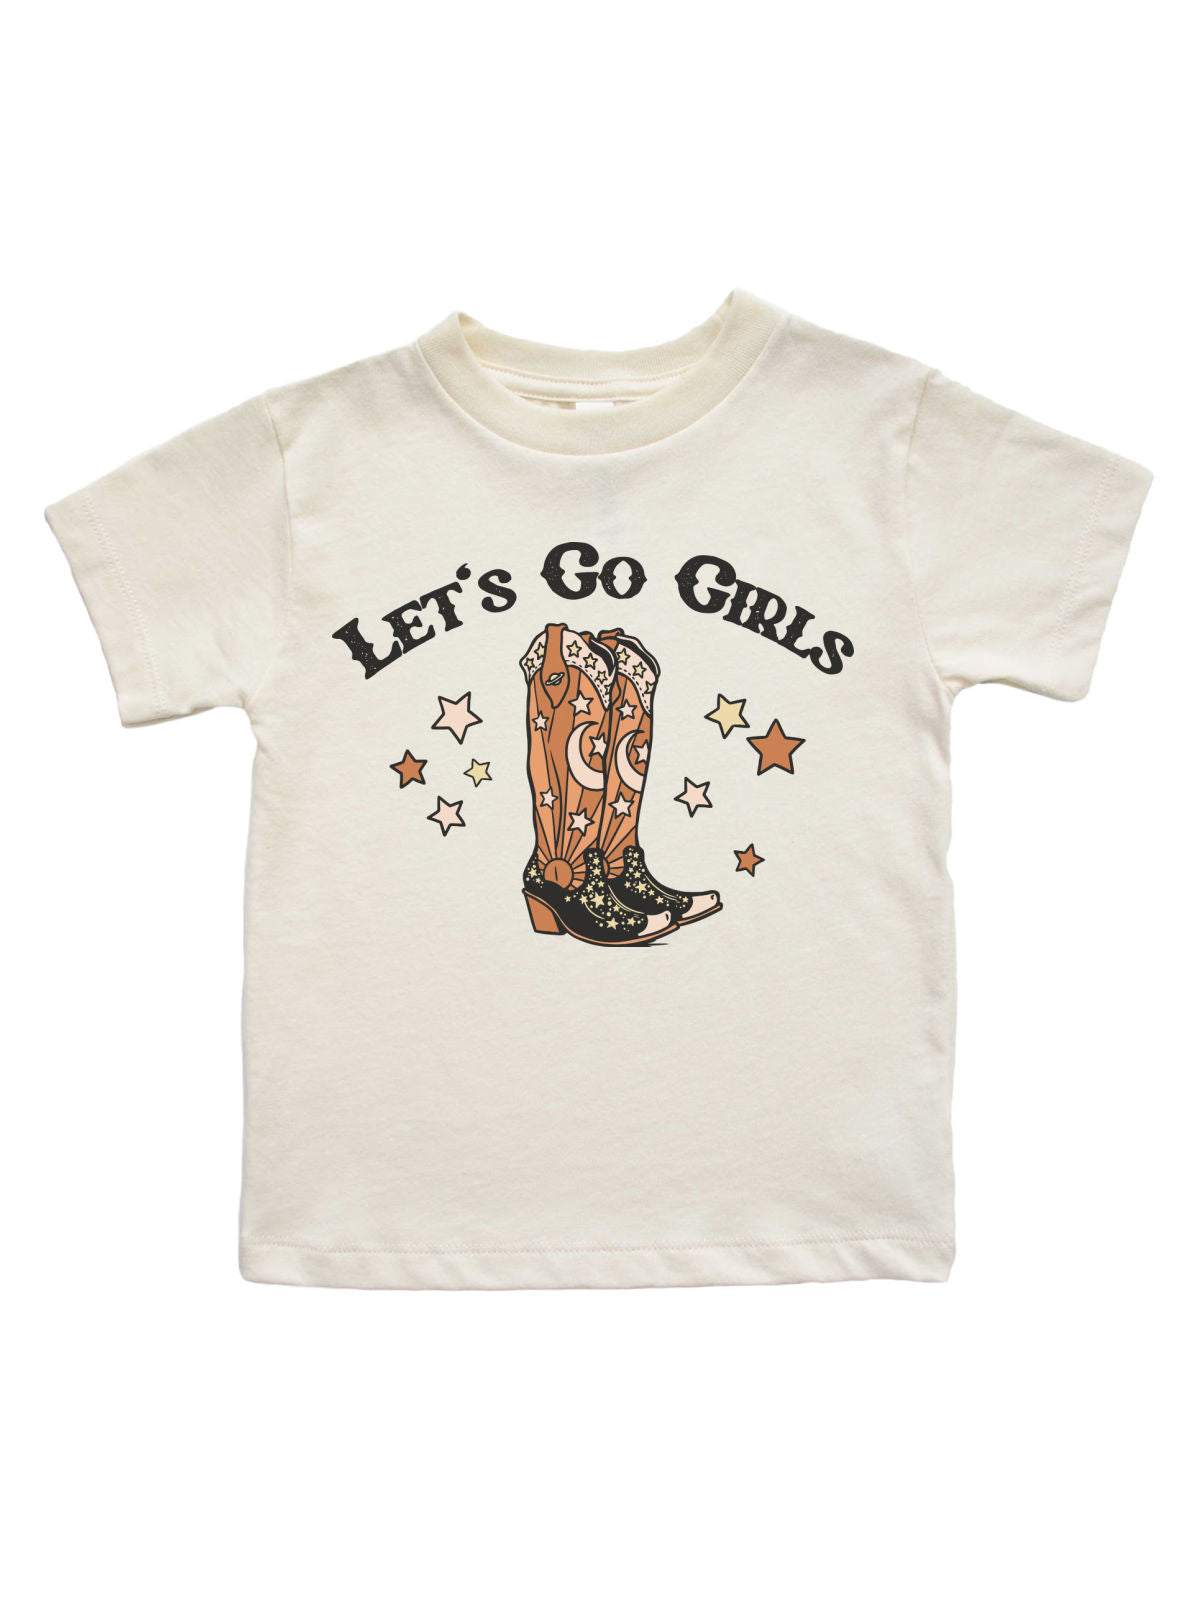 Lets Go Girls Kids Shirt